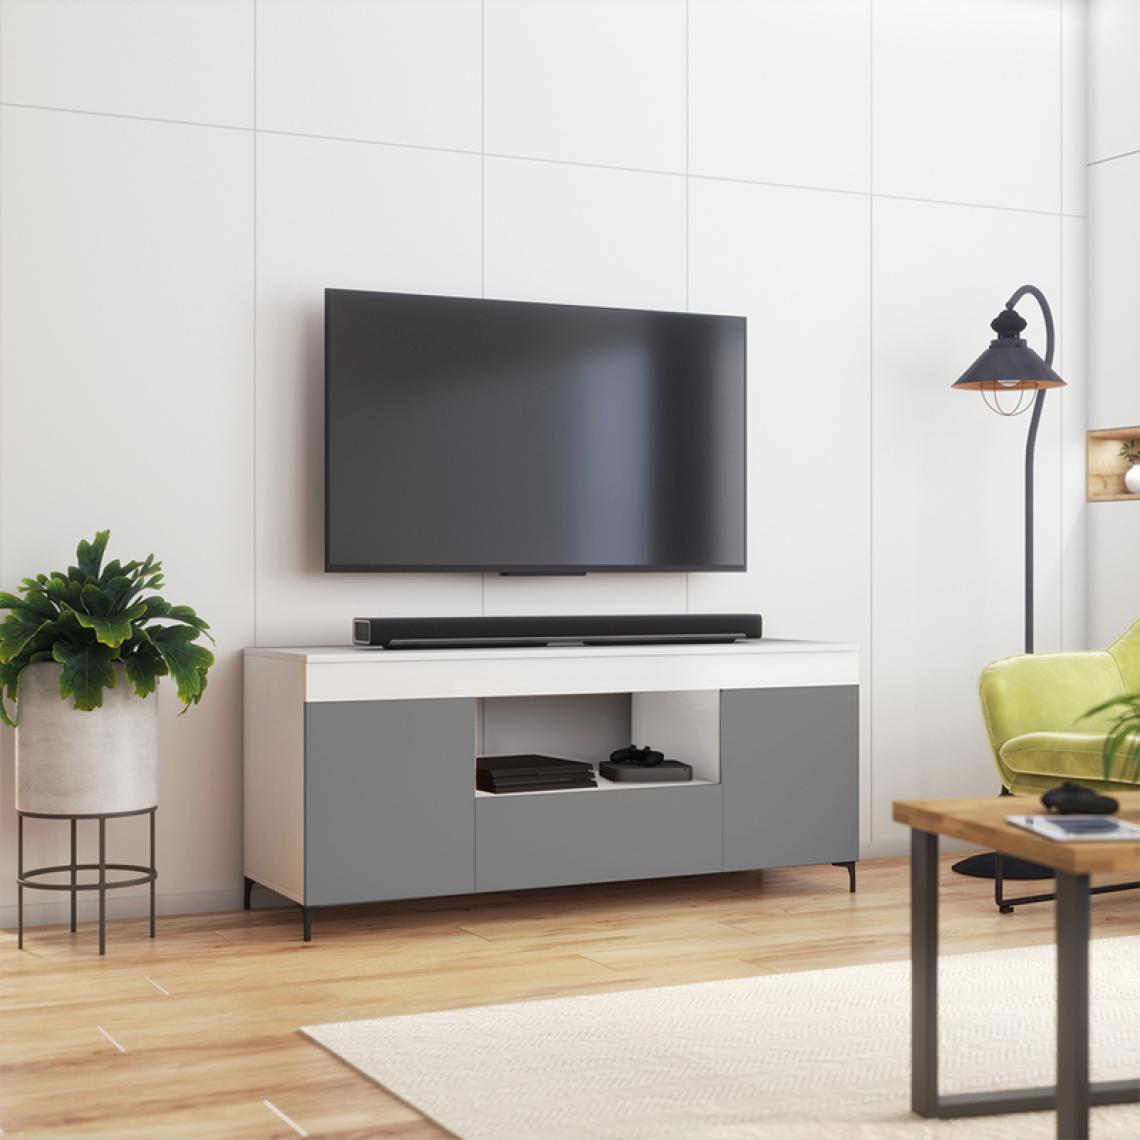 Selsey - Meuble tv - GUSTO - 137 cm - blanc mat / gris mat - style contemporain - Meubles TV, Hi-Fi